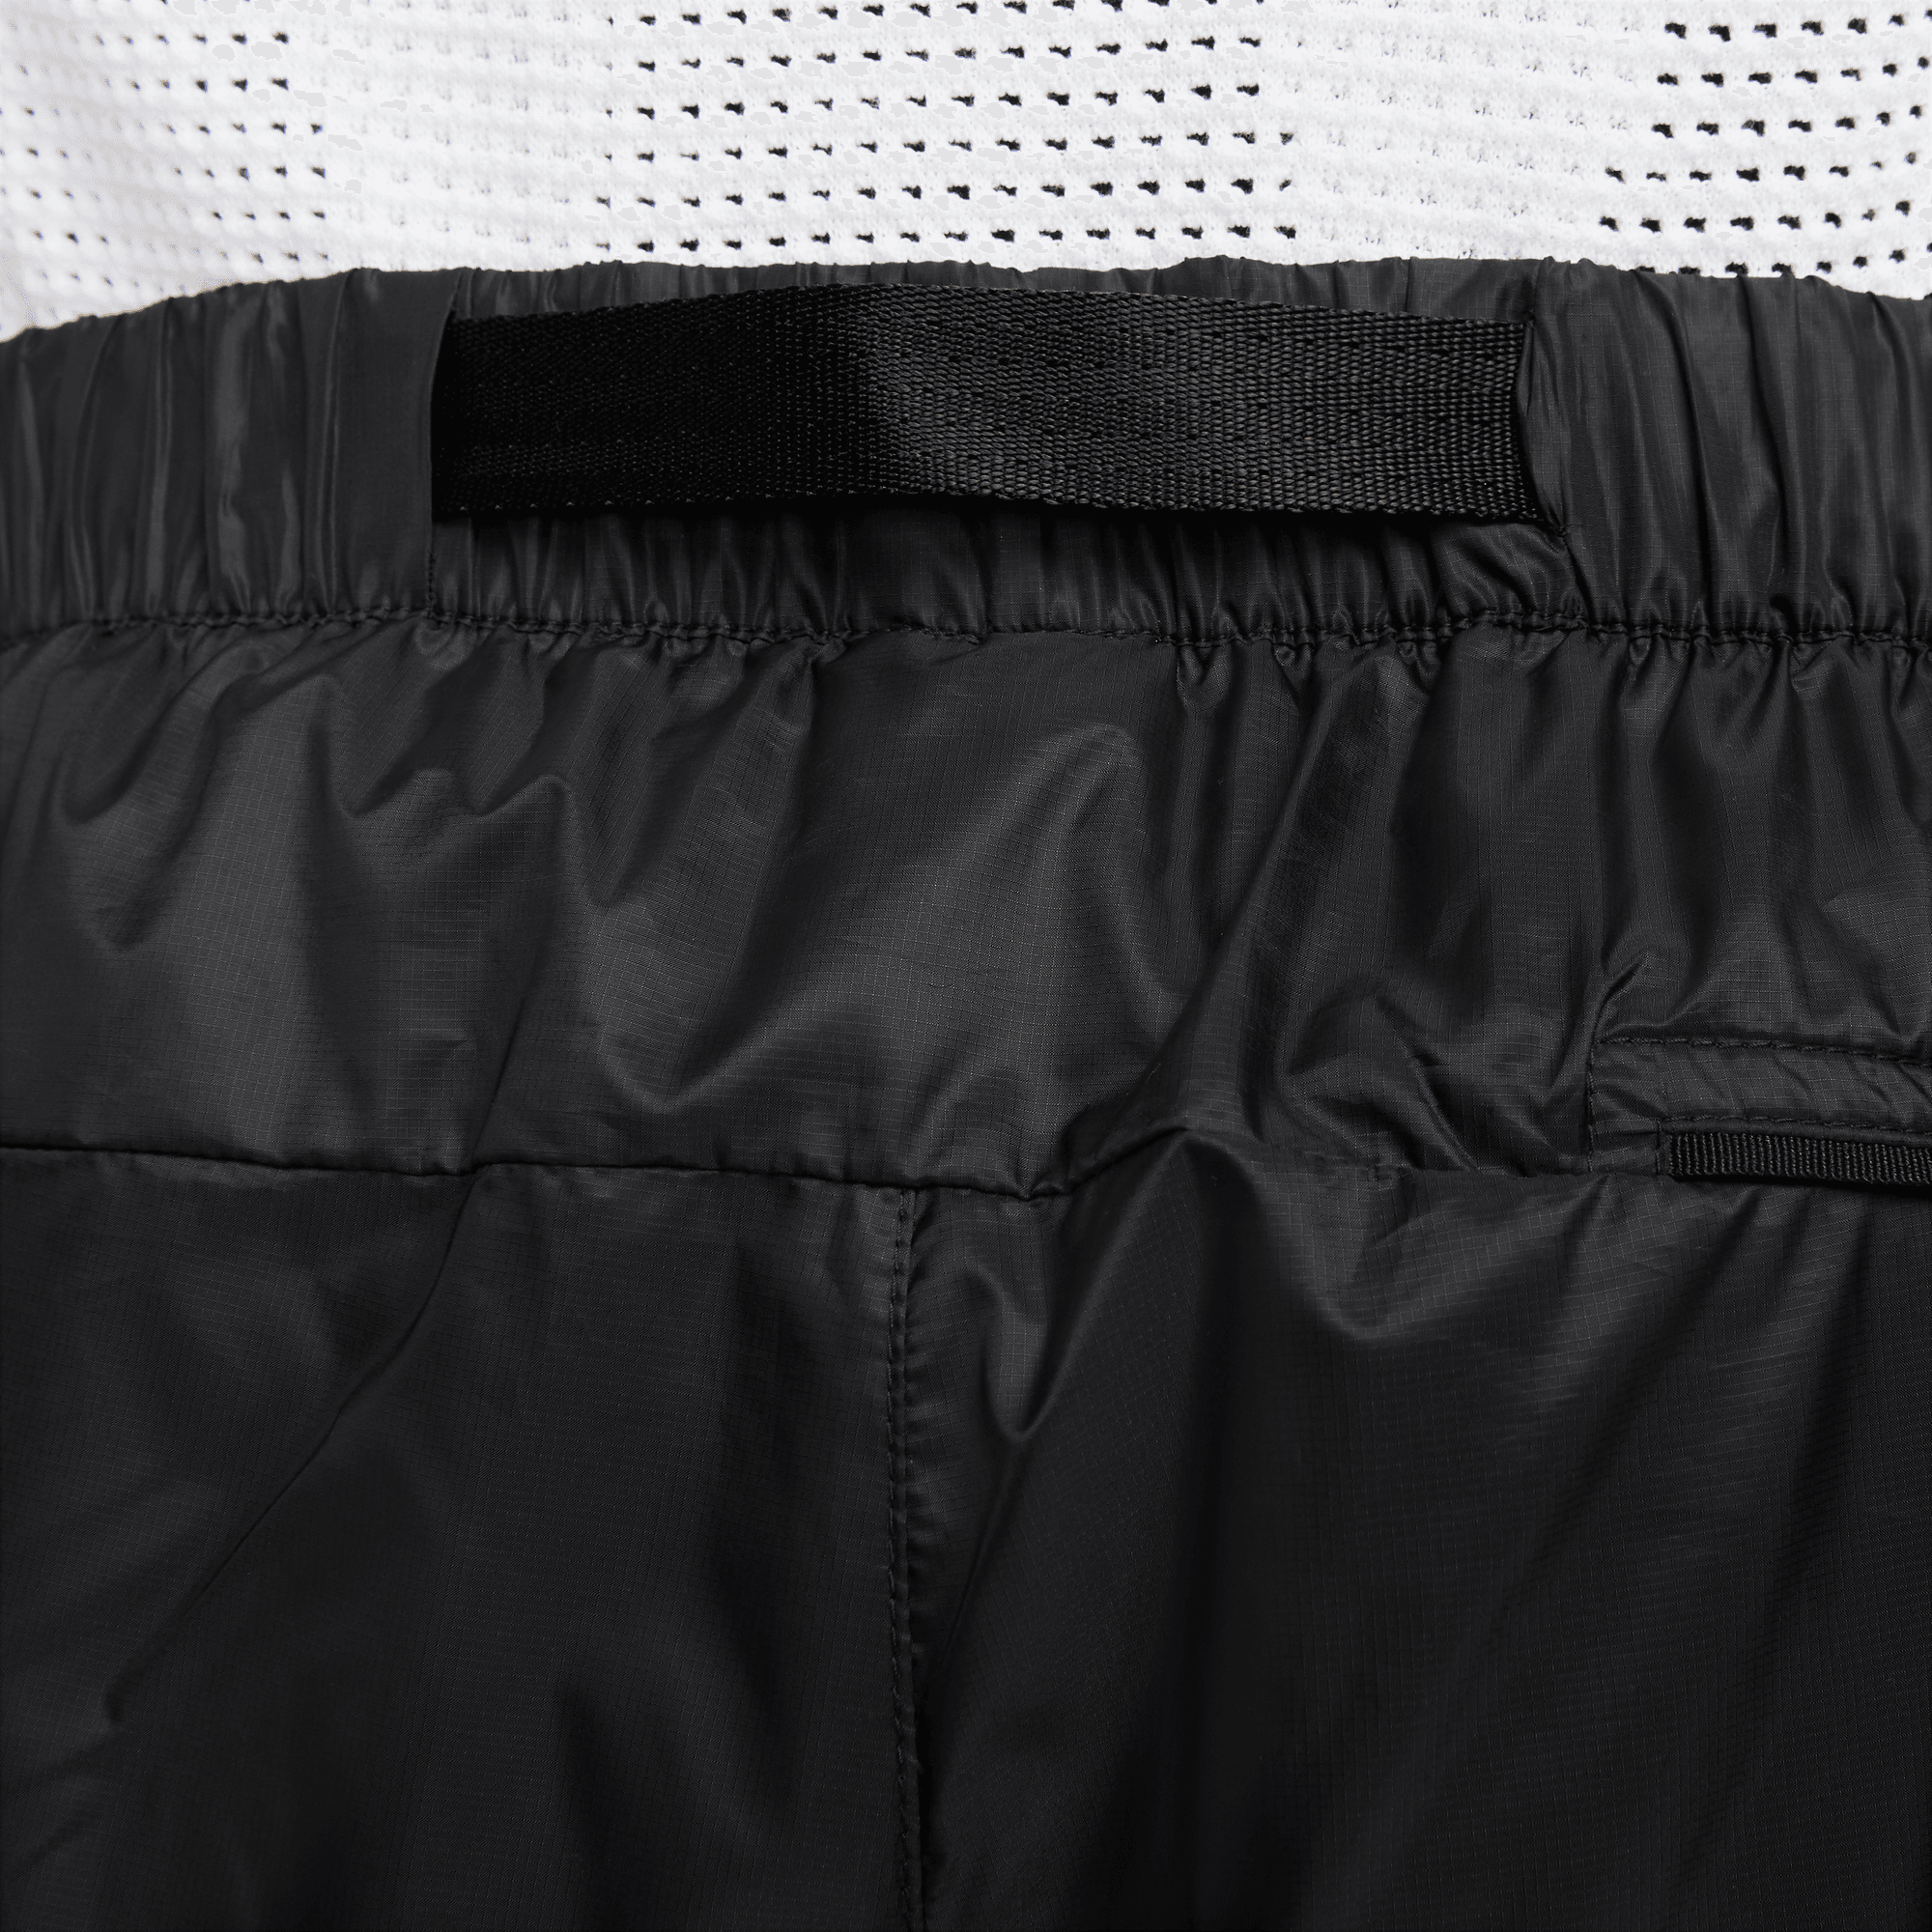 Nike Tech Men's Lined Woven Pants